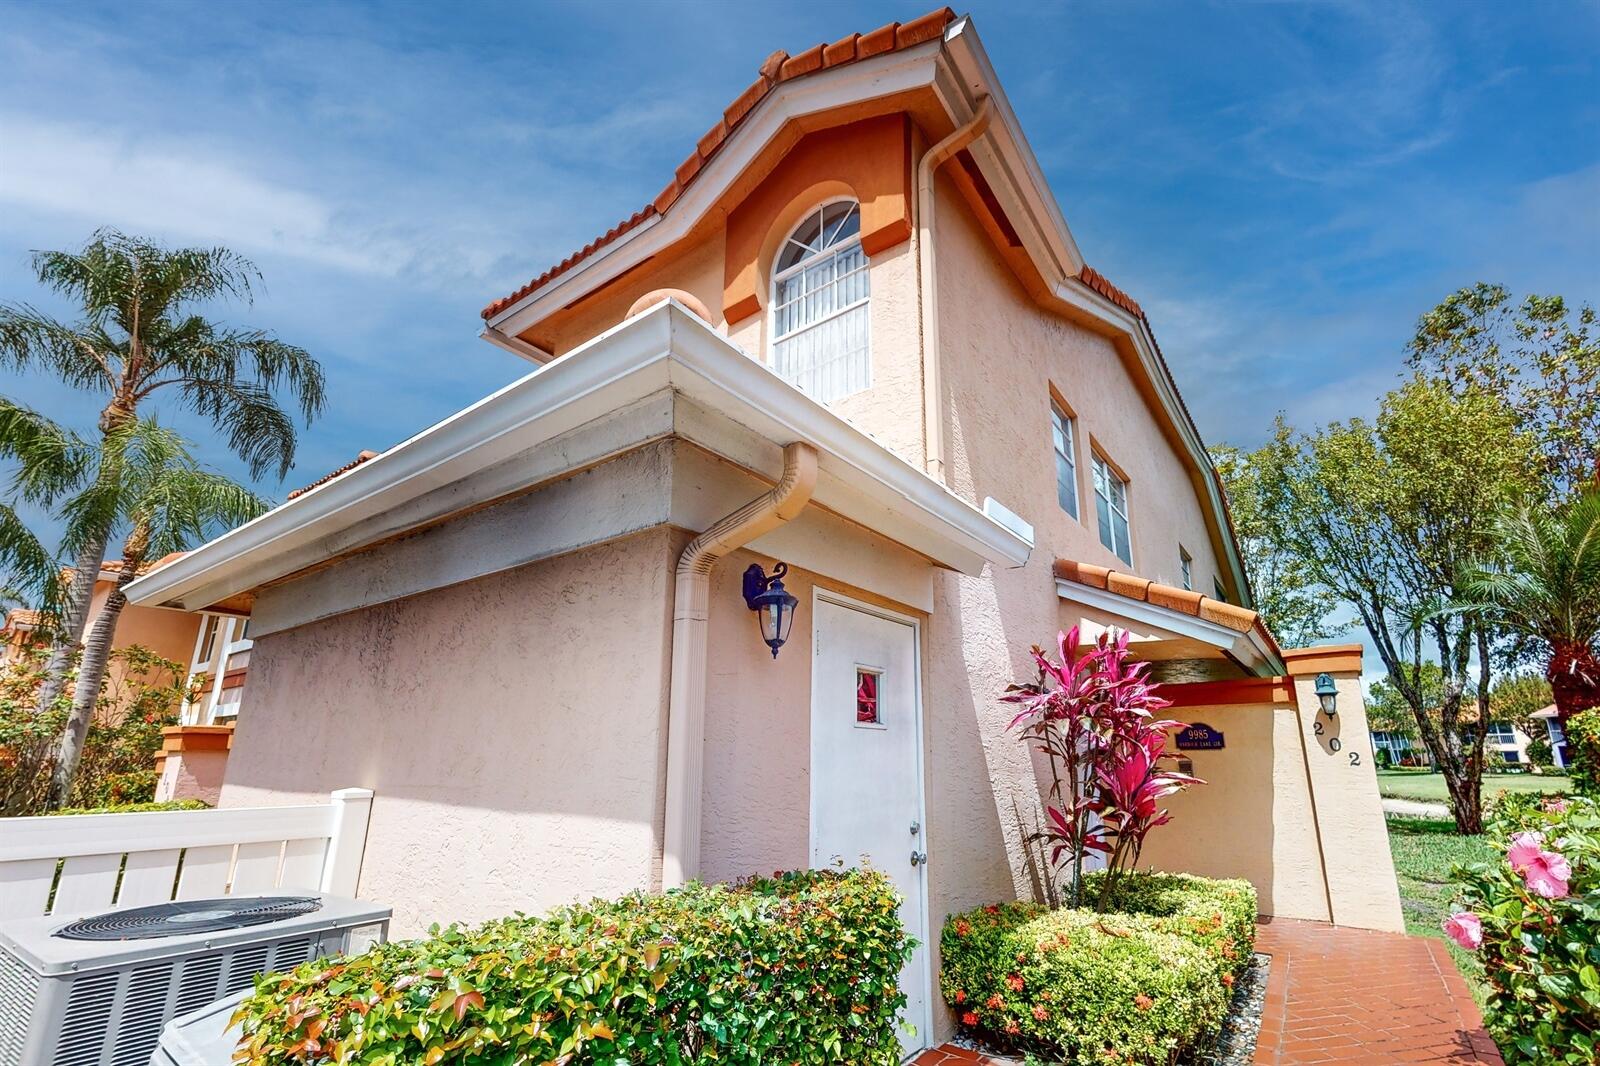 Property for Sale at 9985 Harbour Lake Circle 202, Boynton Beach, Palm Beach County, Florida - Bedrooms: 3 
Bathrooms: 2  - $340,000